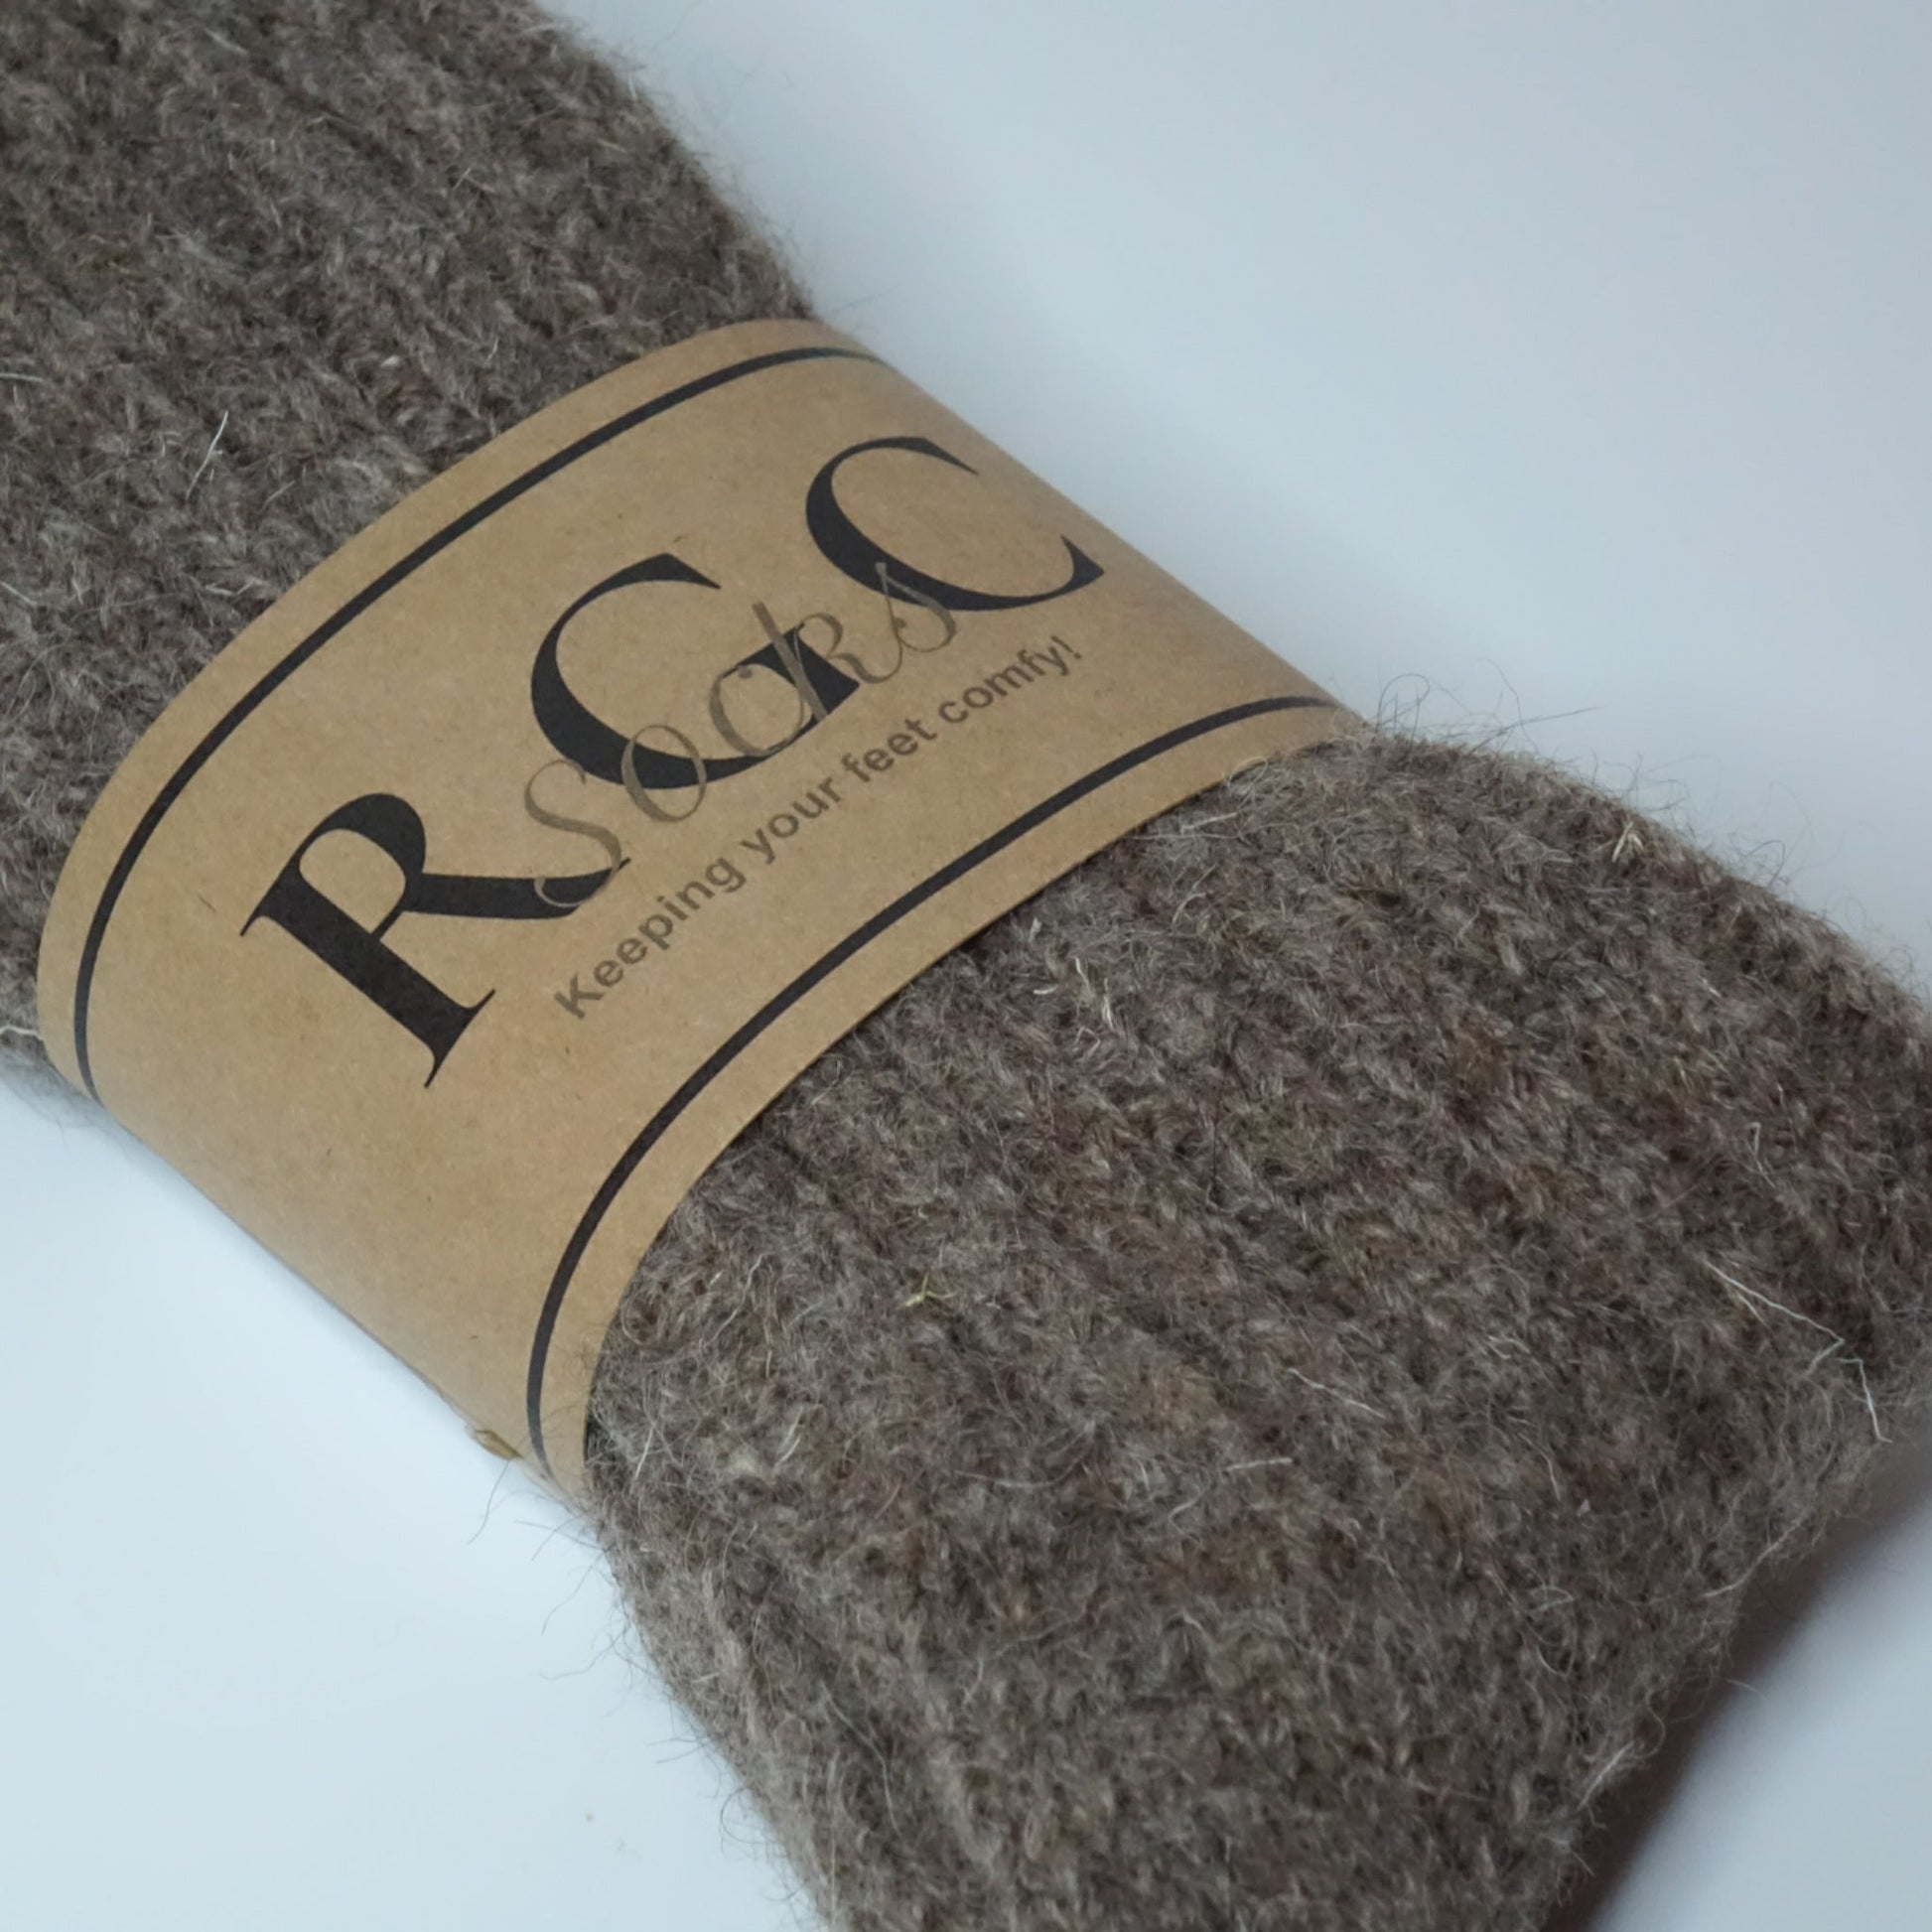 rgc socks bythemountain socks alpaca brown wool socks